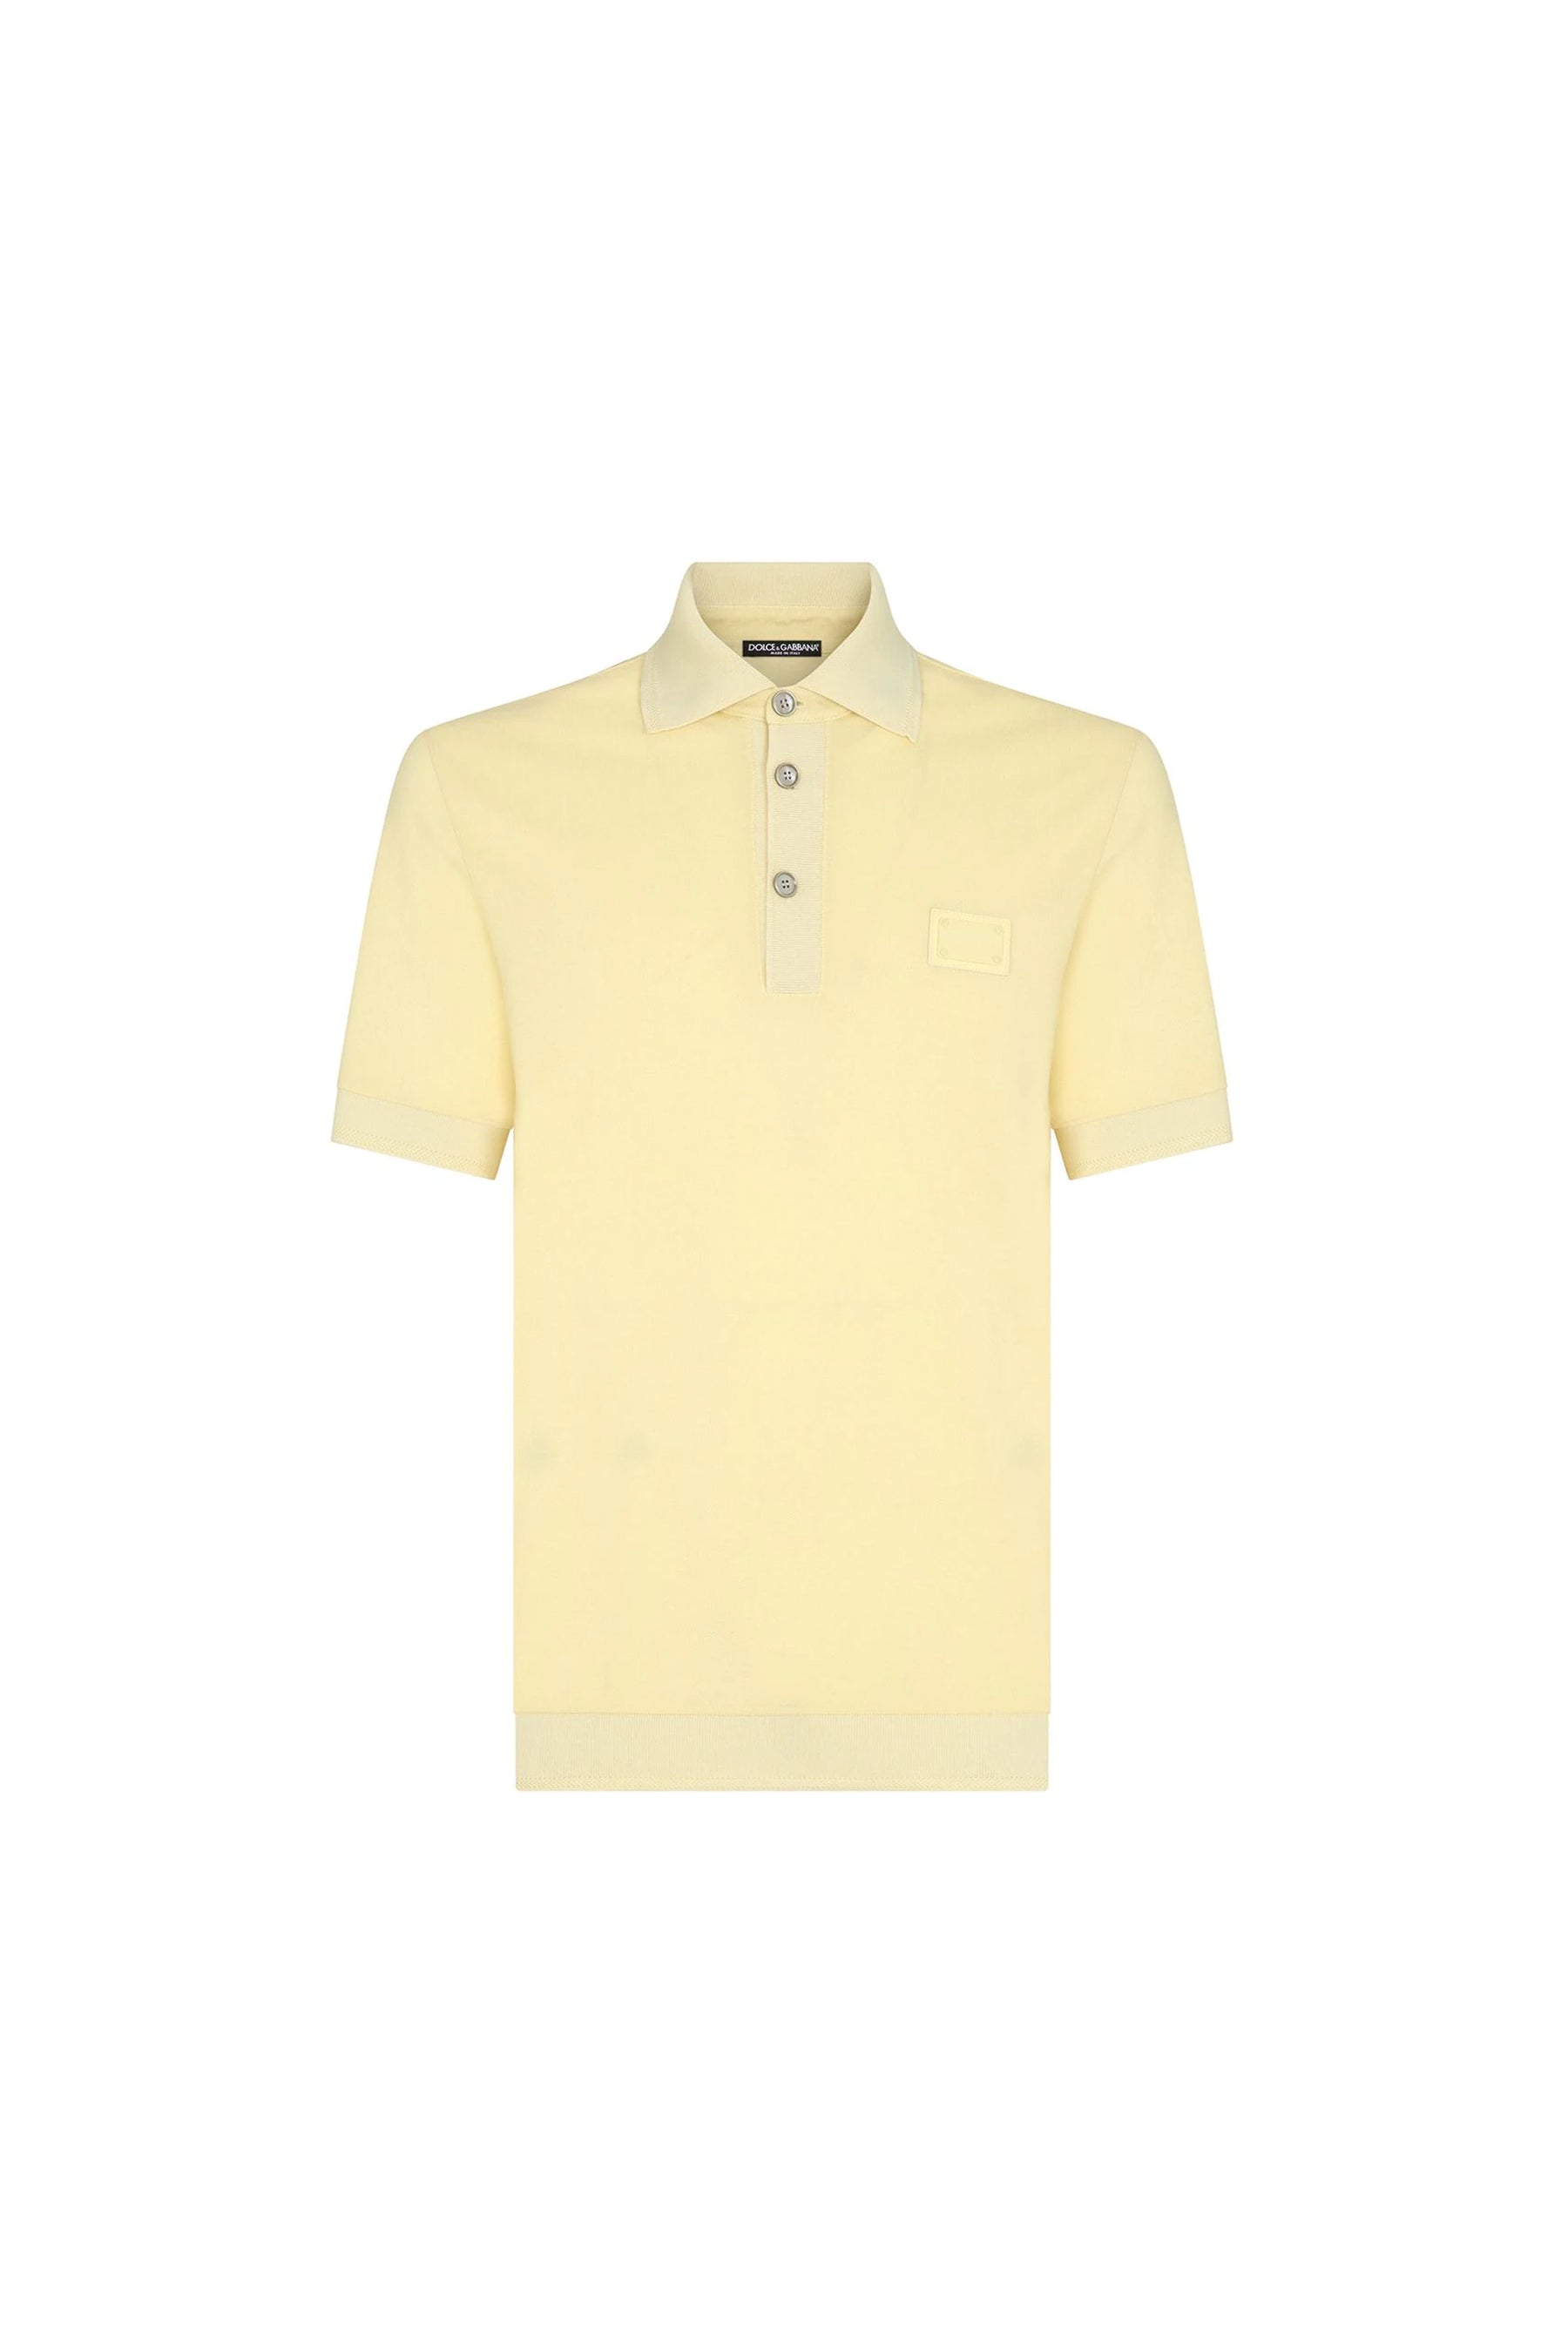 Dolce & Gabbana Yellow logo-patch polo shirt